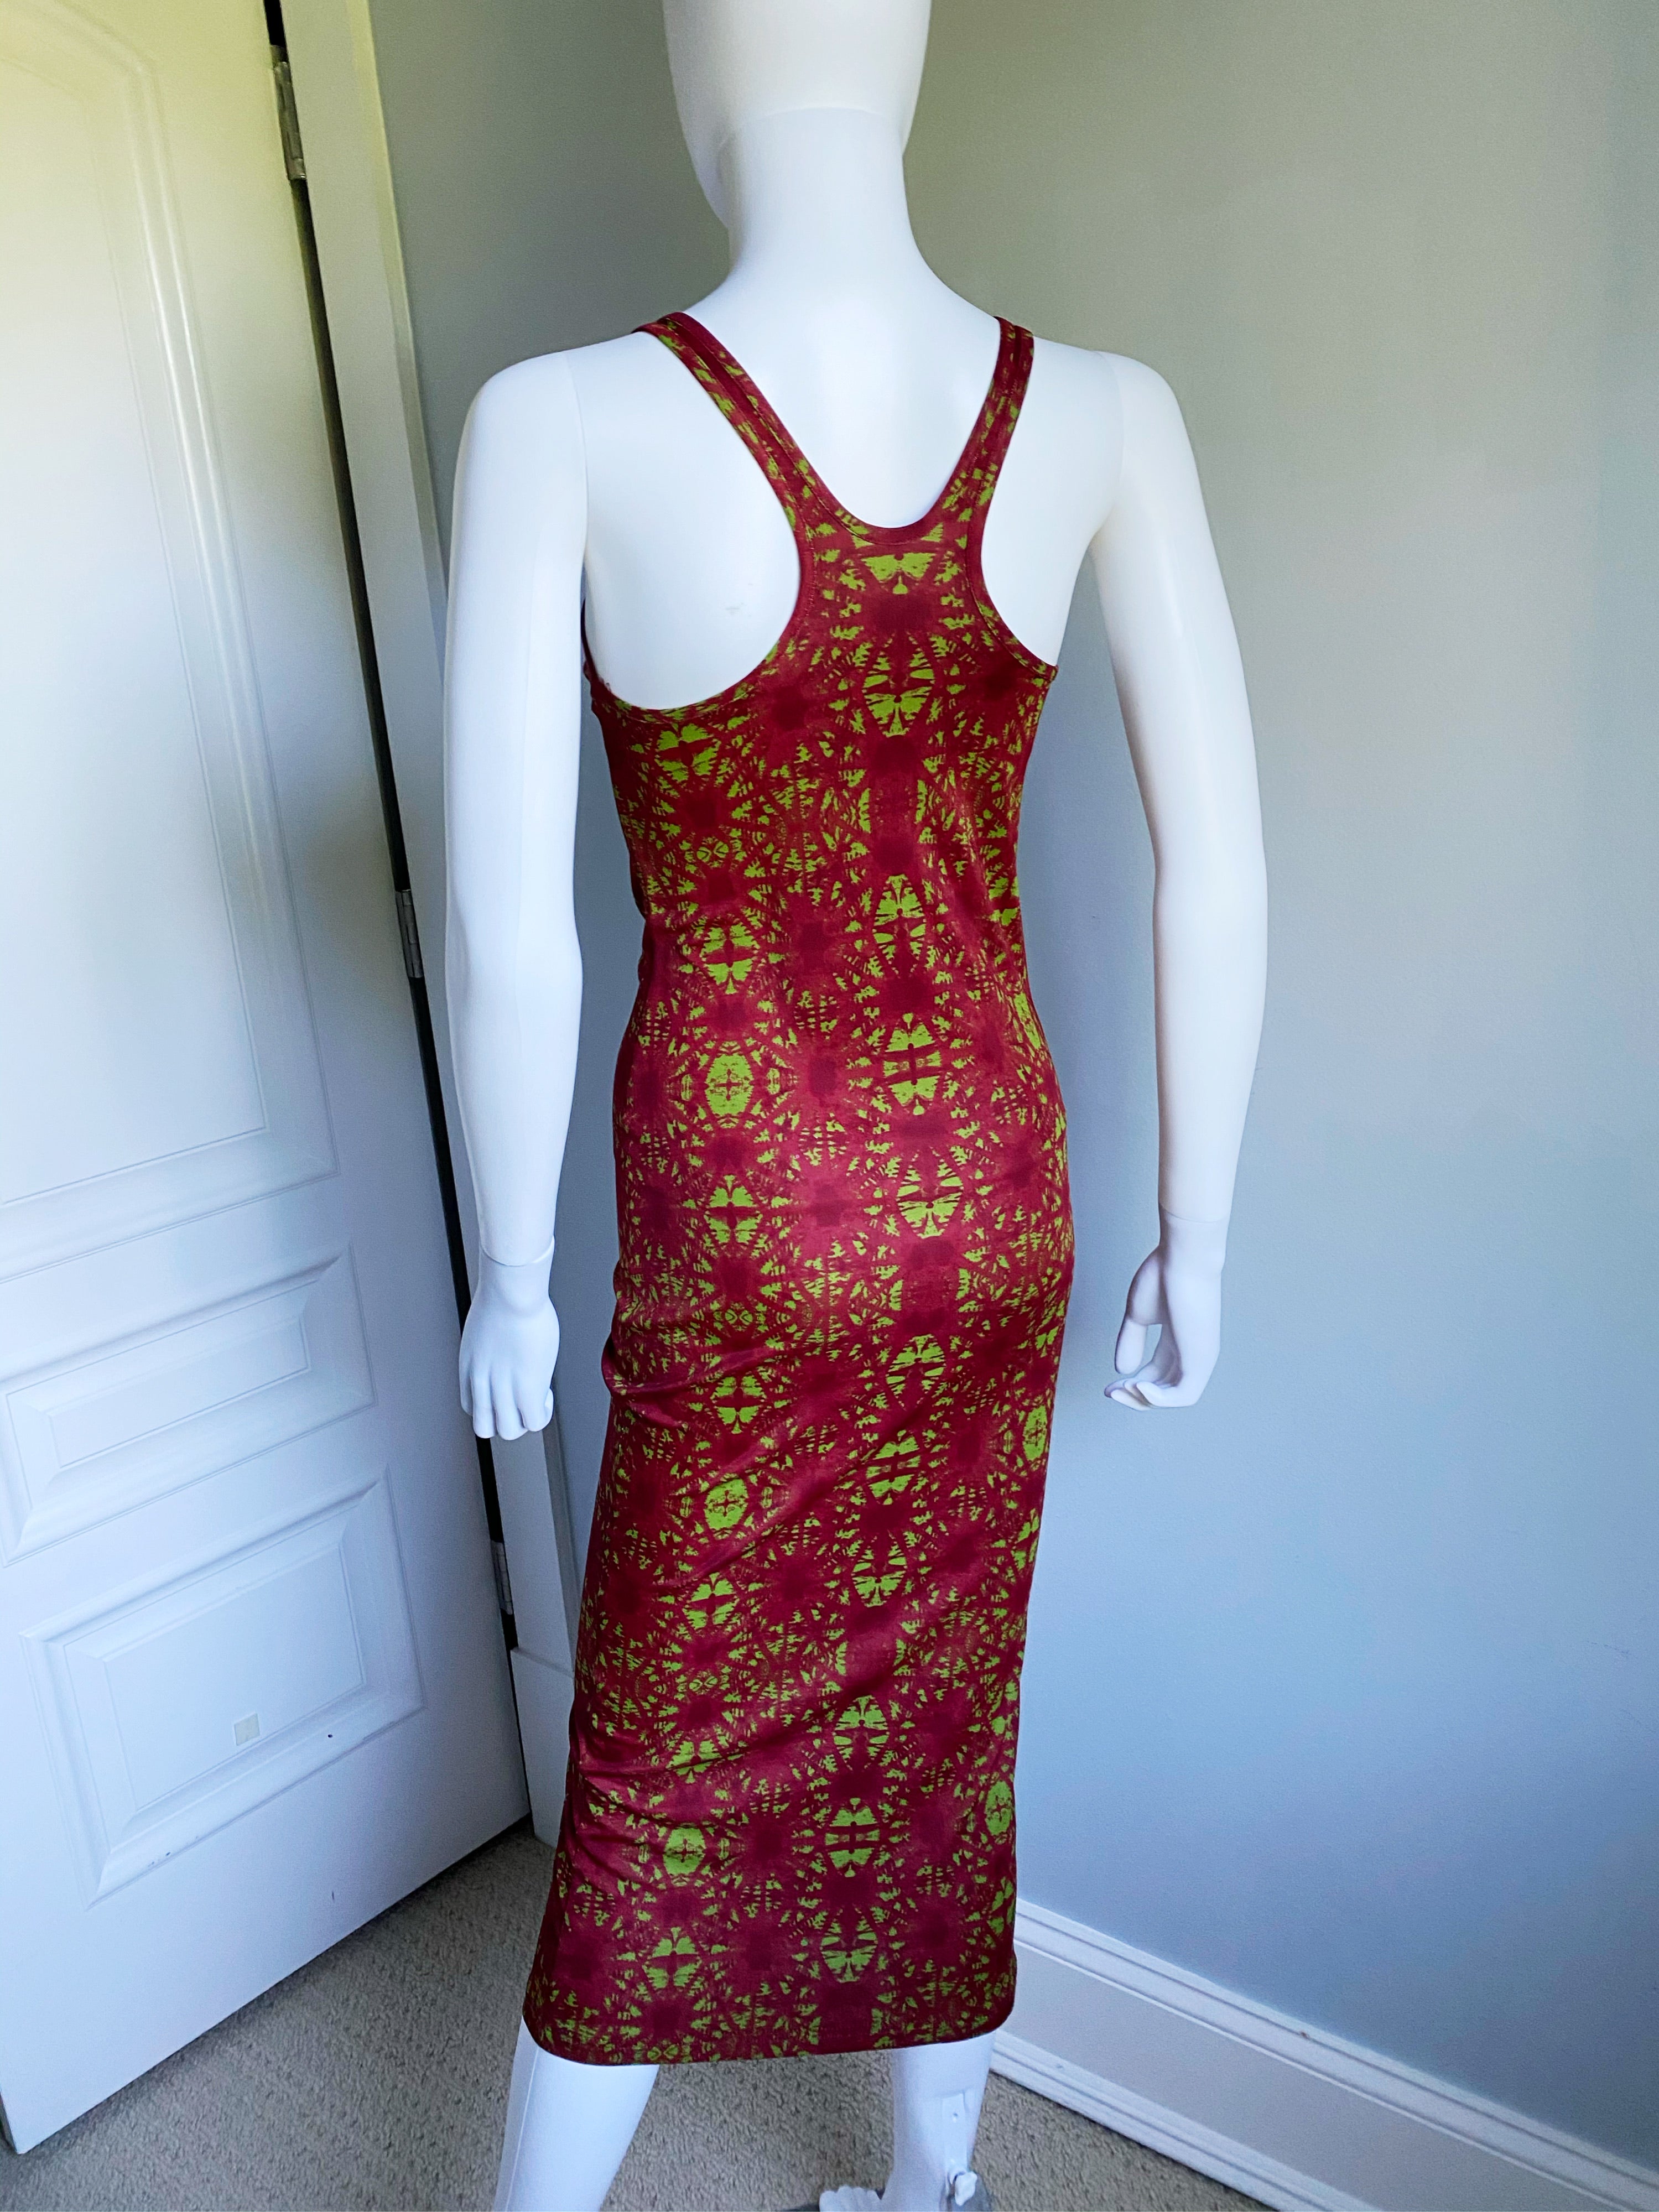 Jean Paul Gaultier Midi-Length Dress